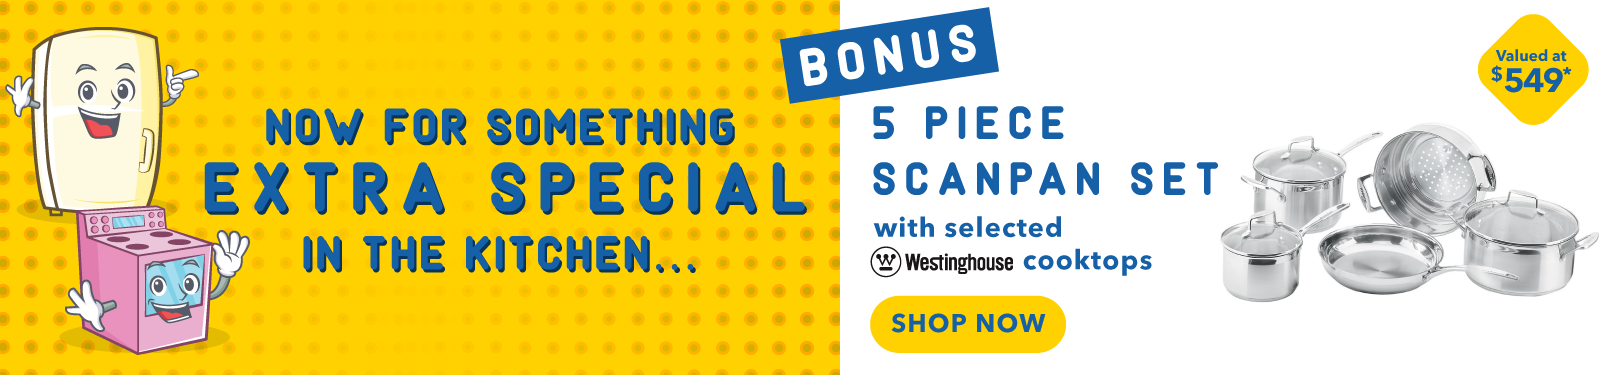 Electrolux and Westinghouse Kitchen Bonus Sale - Bonus 5 Piece Scanpan Set